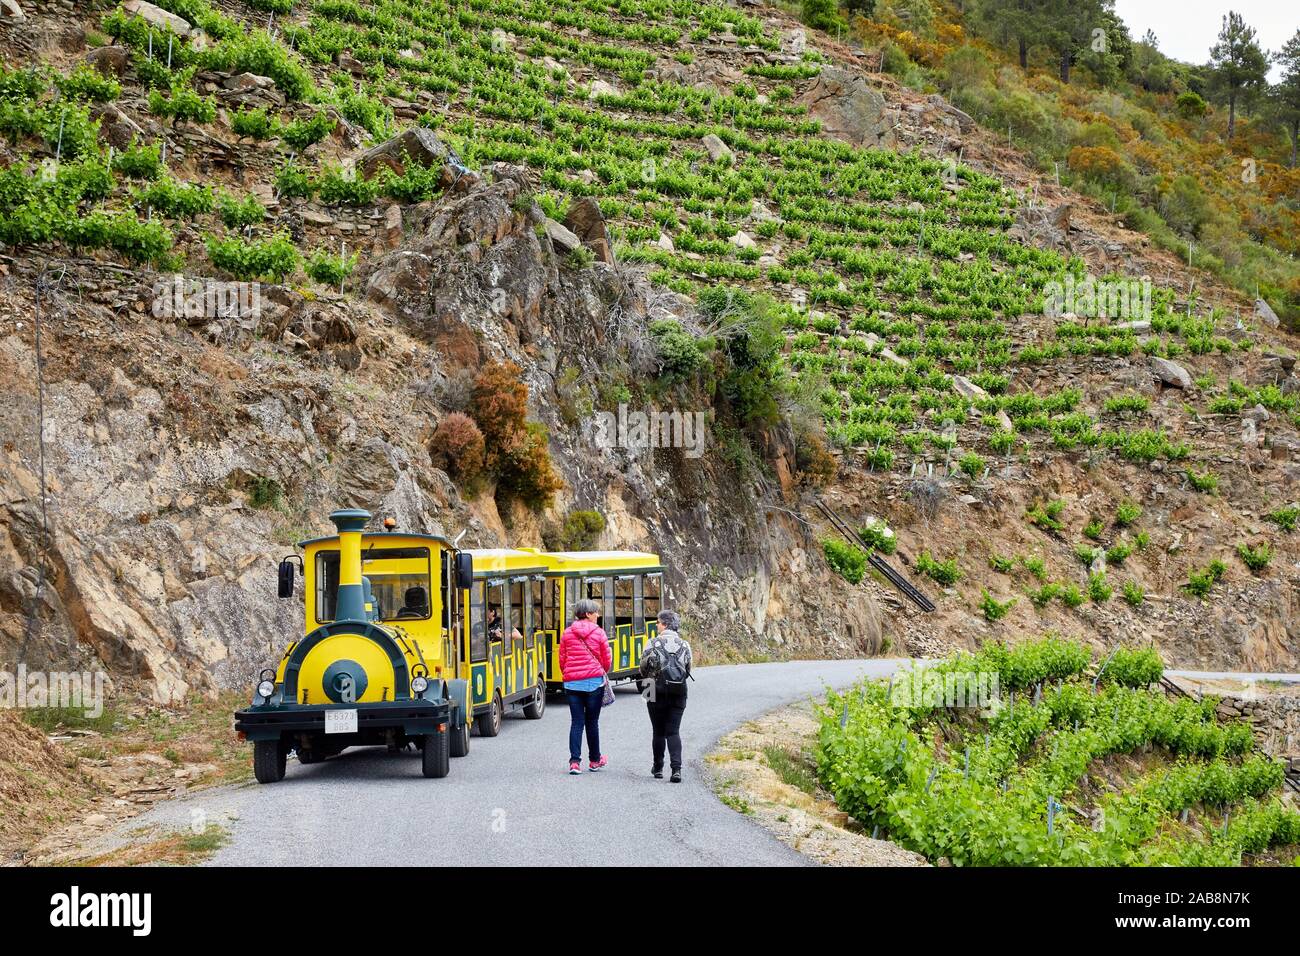 Aba Sacra Touristenzug, Ribeira Sacra, heroischen Weinbau, Sil River Canyon, Doade, nüchtern, Lugo, Galizien, Spanien Stockfoto